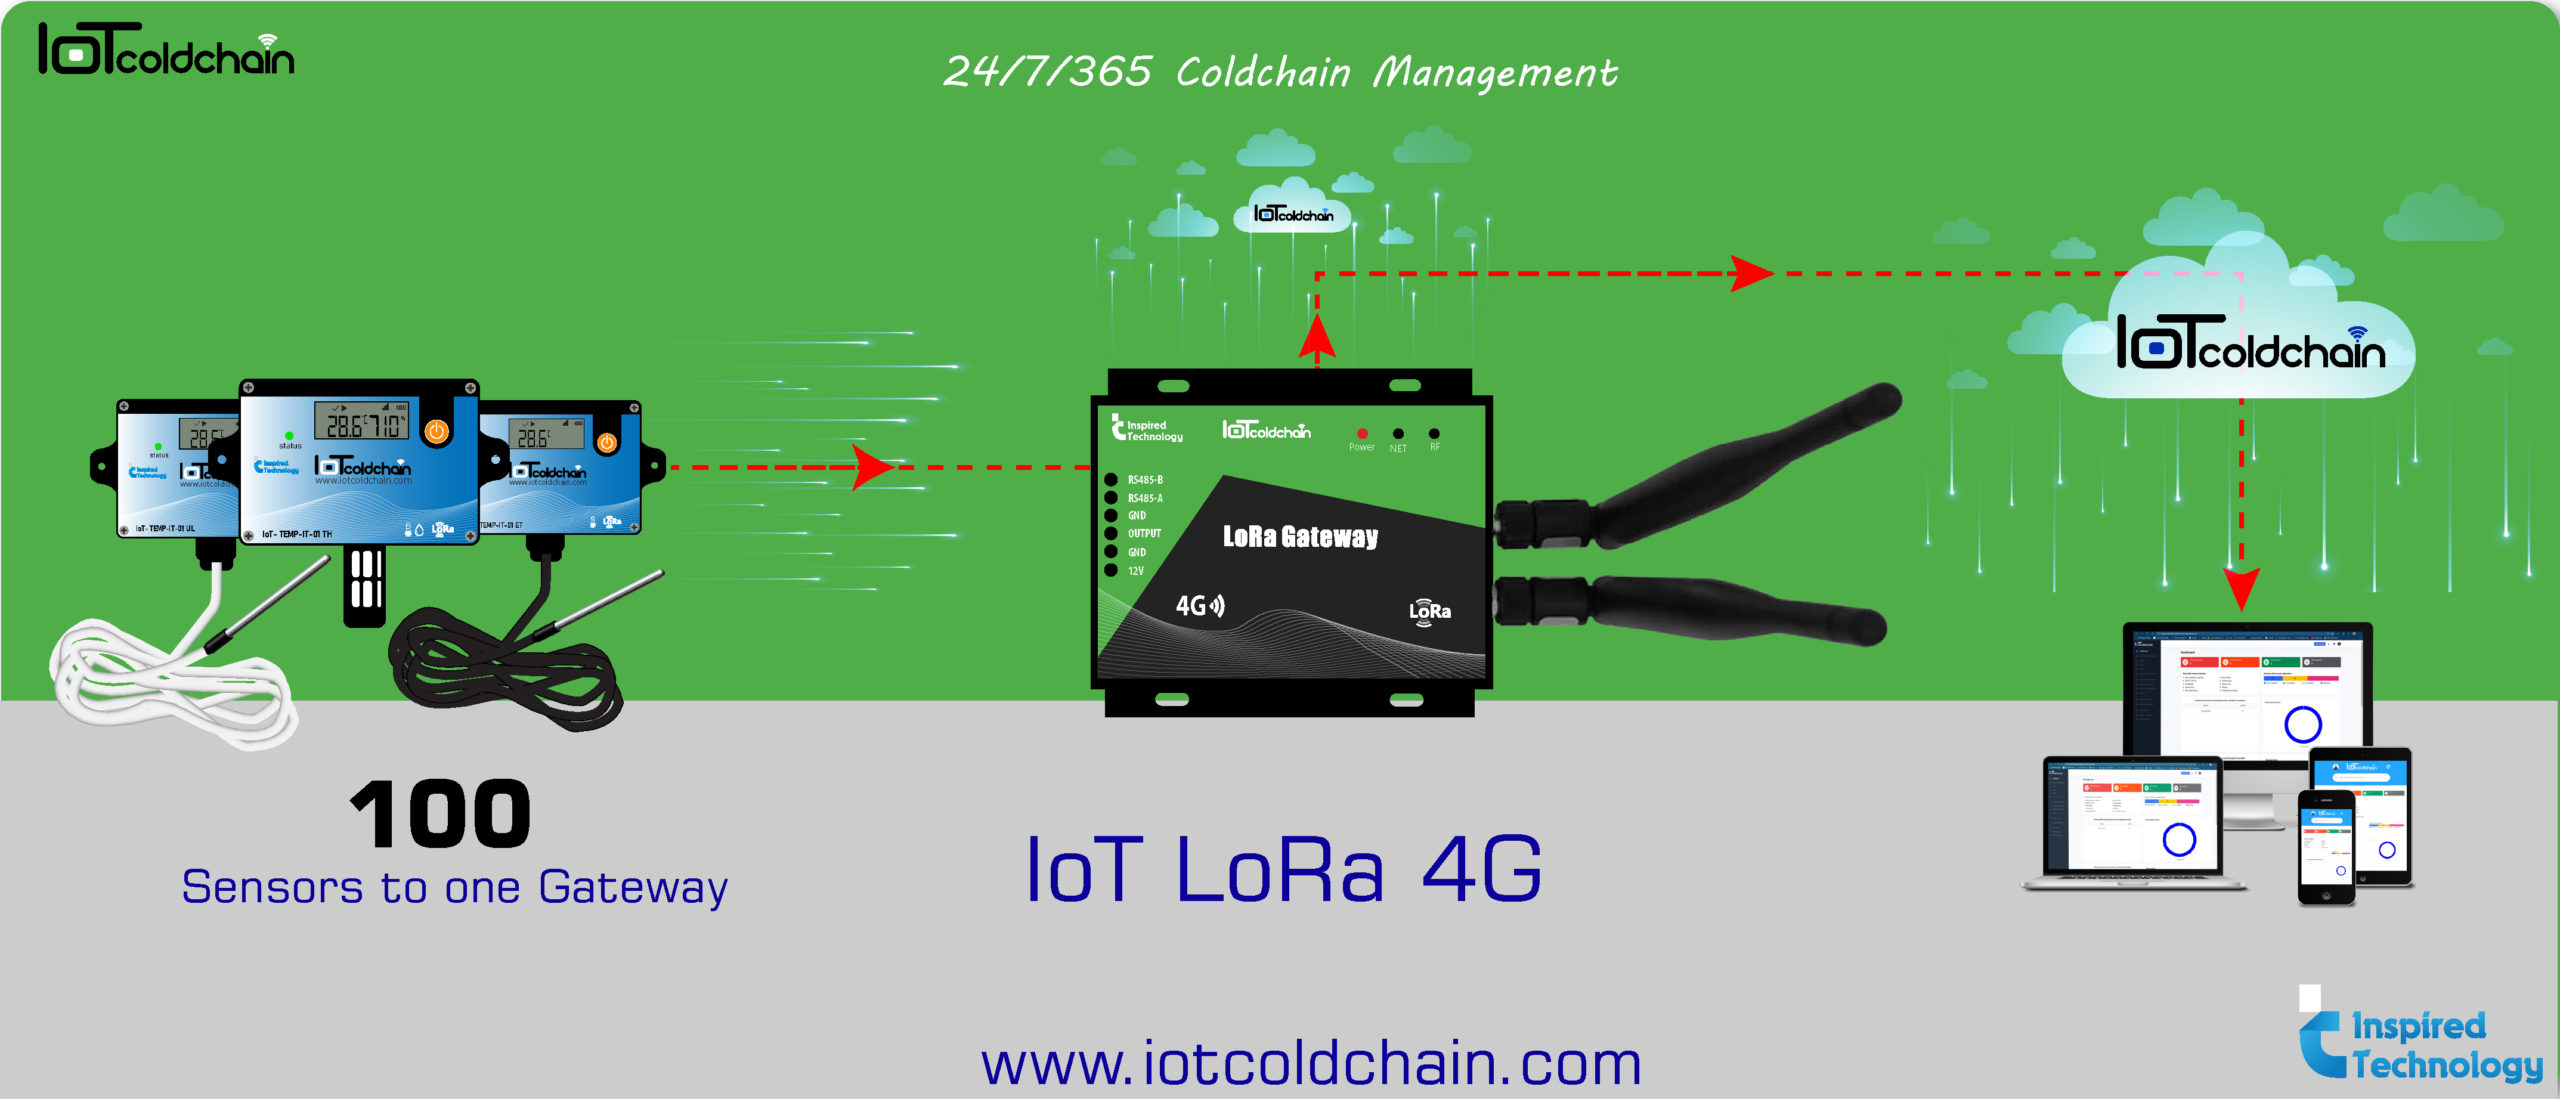 LoRa-Gateway 4G-Sensors-Images_03-01